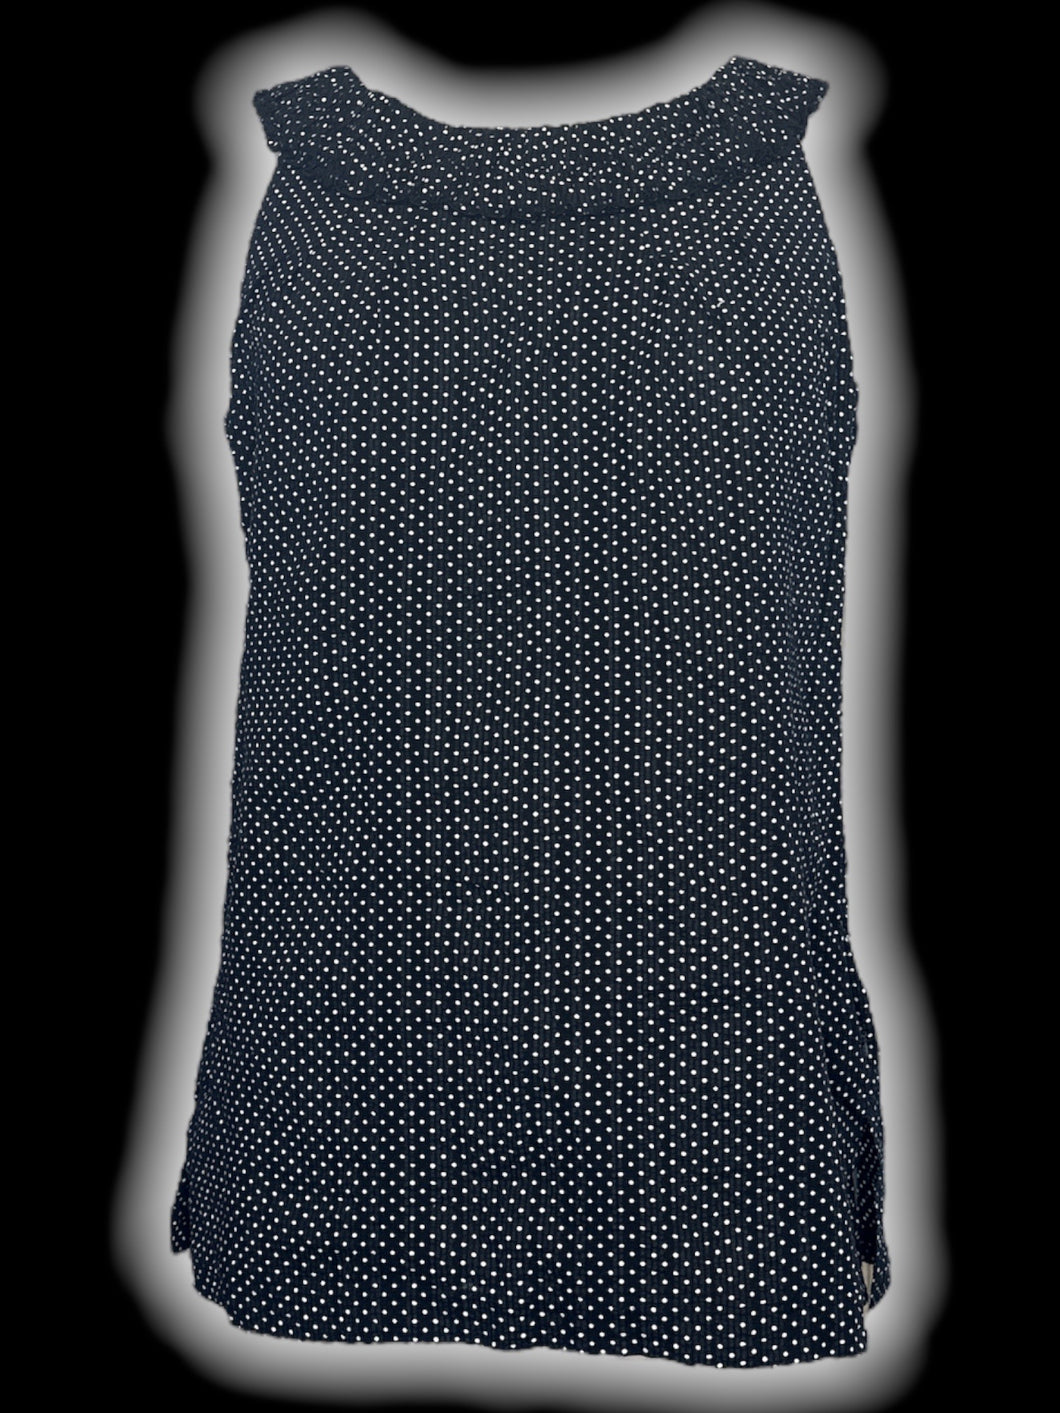 M Black sleevless scoopneck top w/ pleated neckline, white polka dots, small side slits, & side zipper